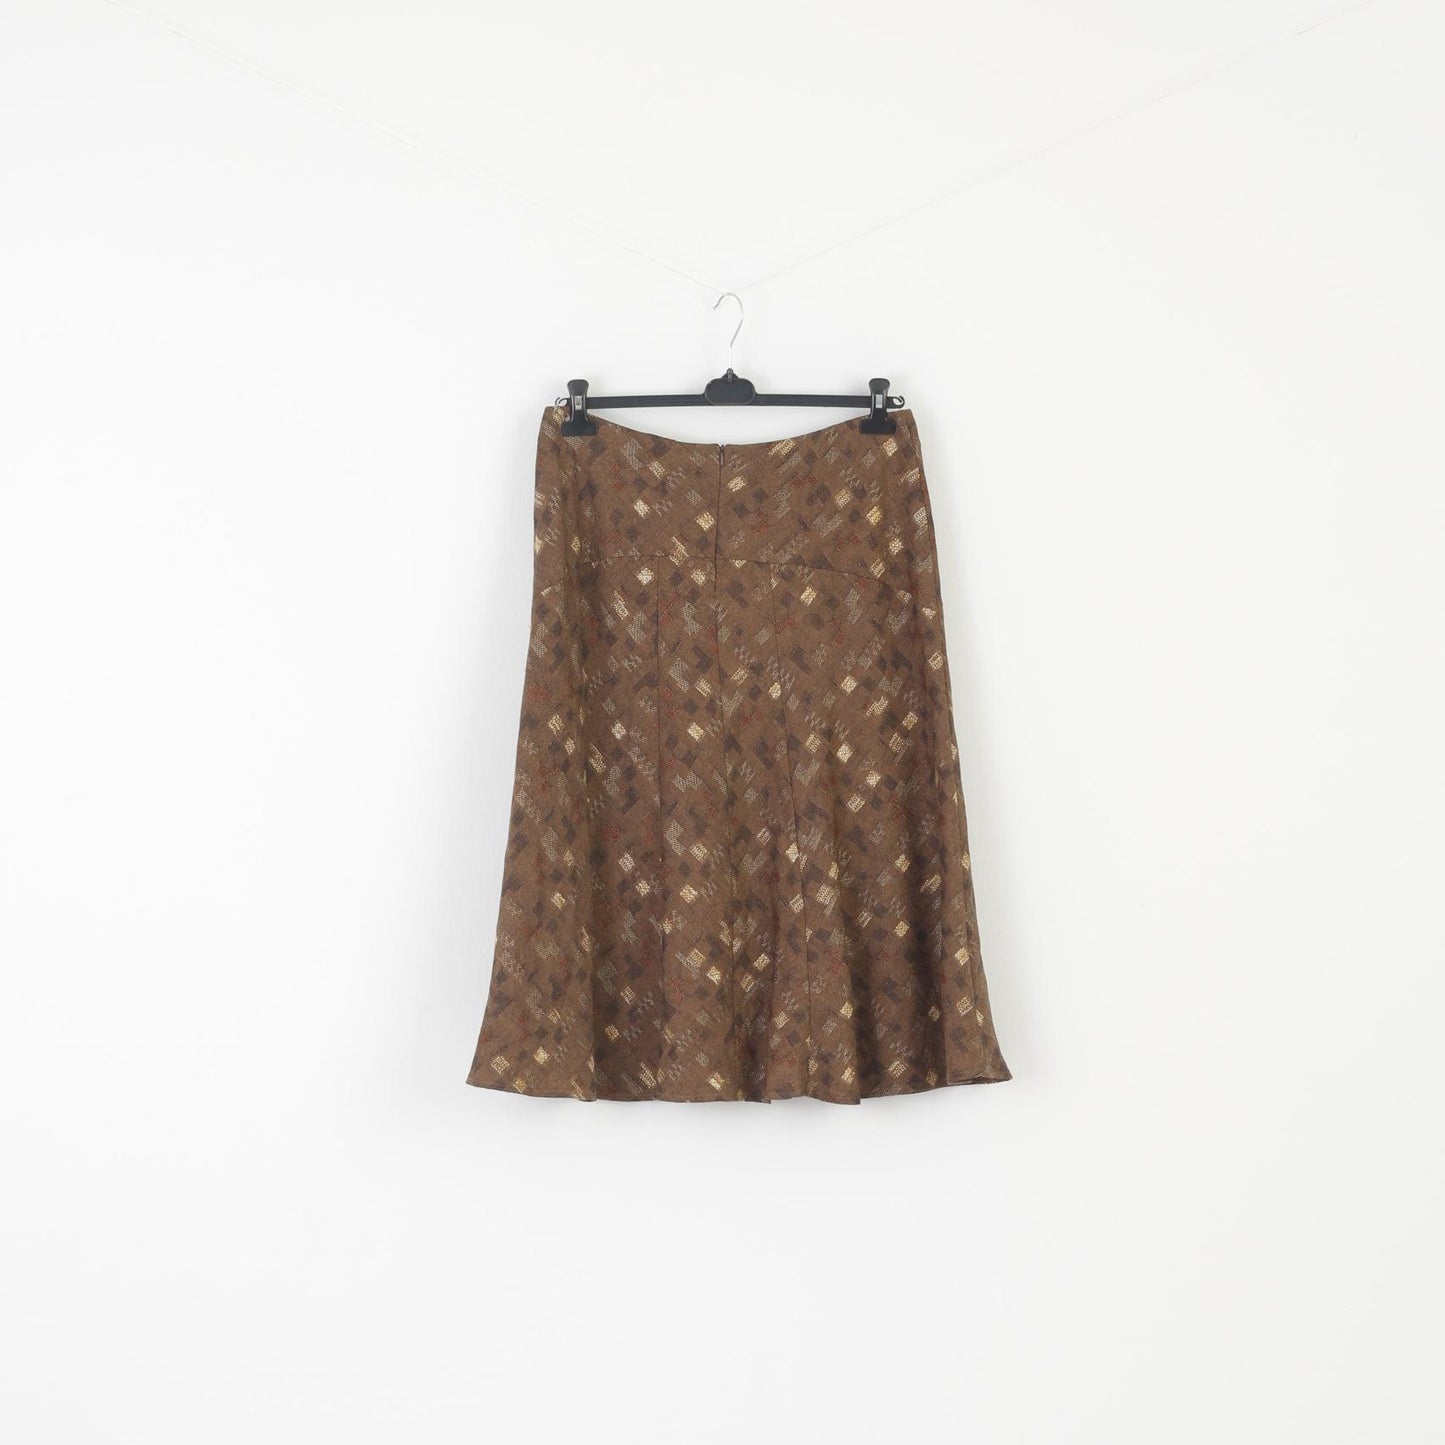 Alex & Co. Women 18 42 Skirt Brown Printed Panelled Midi Flare Vintage